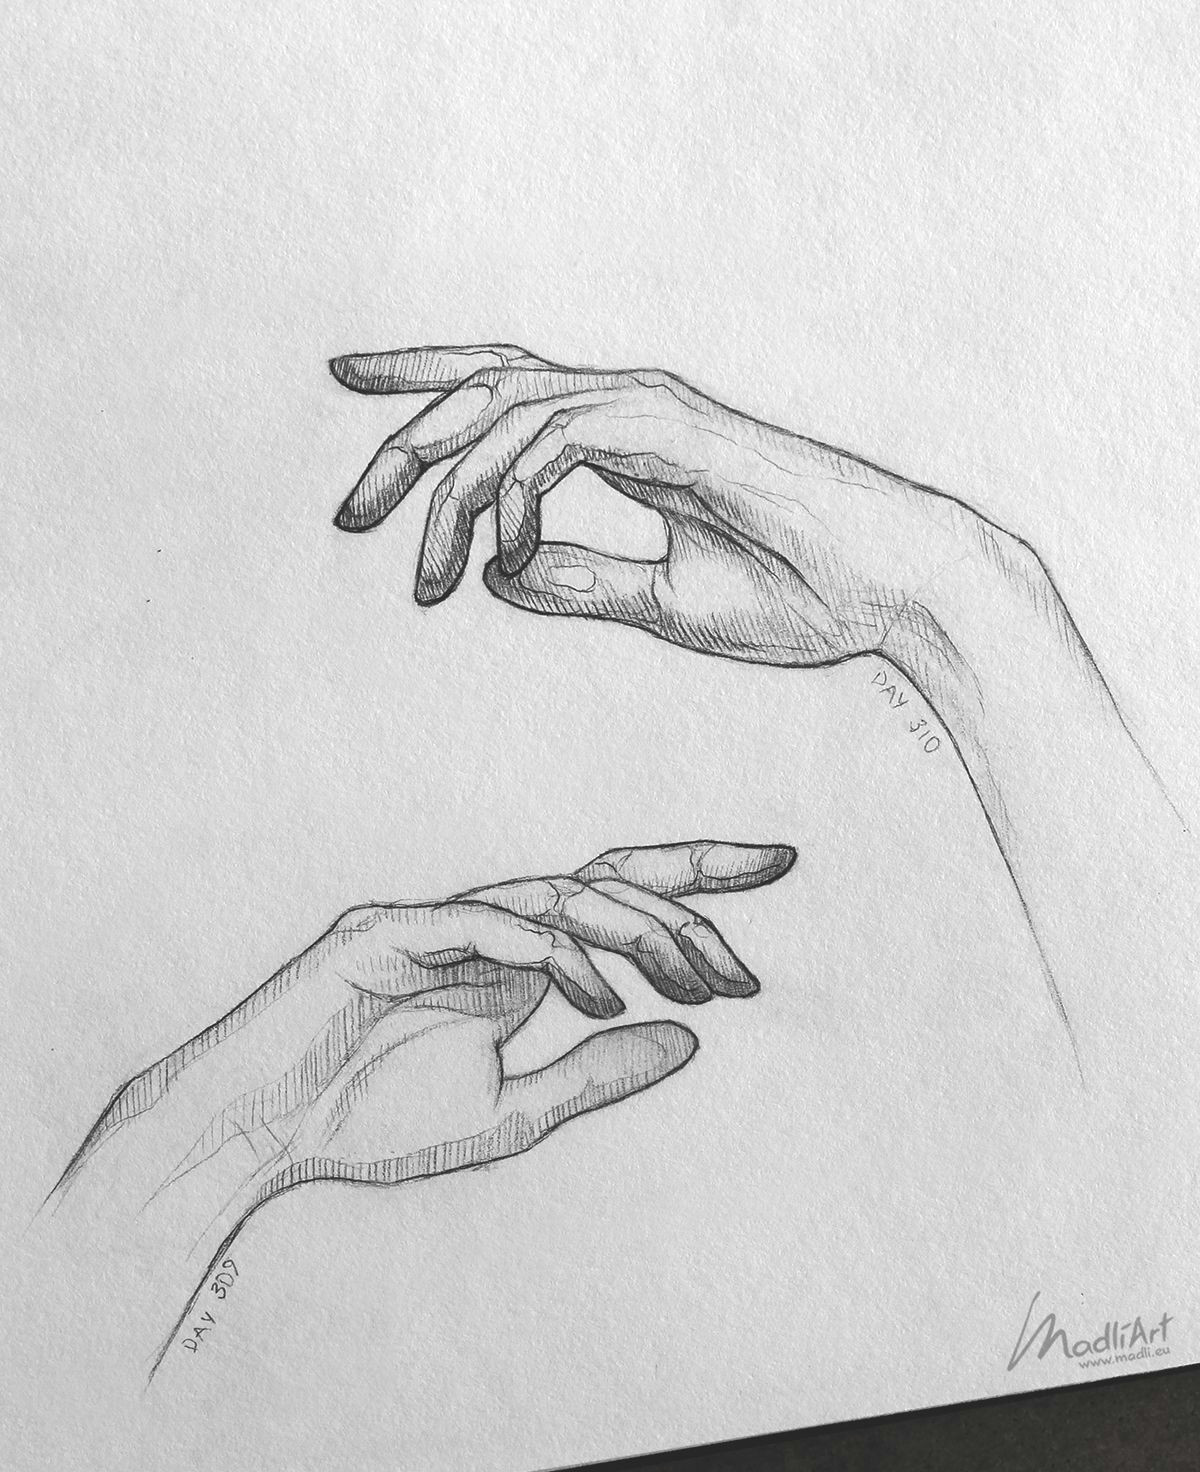 Drawing Ideas for Sketchbook Sketchbook Drawing Of Hands Close Up I Pencil Art Idea I